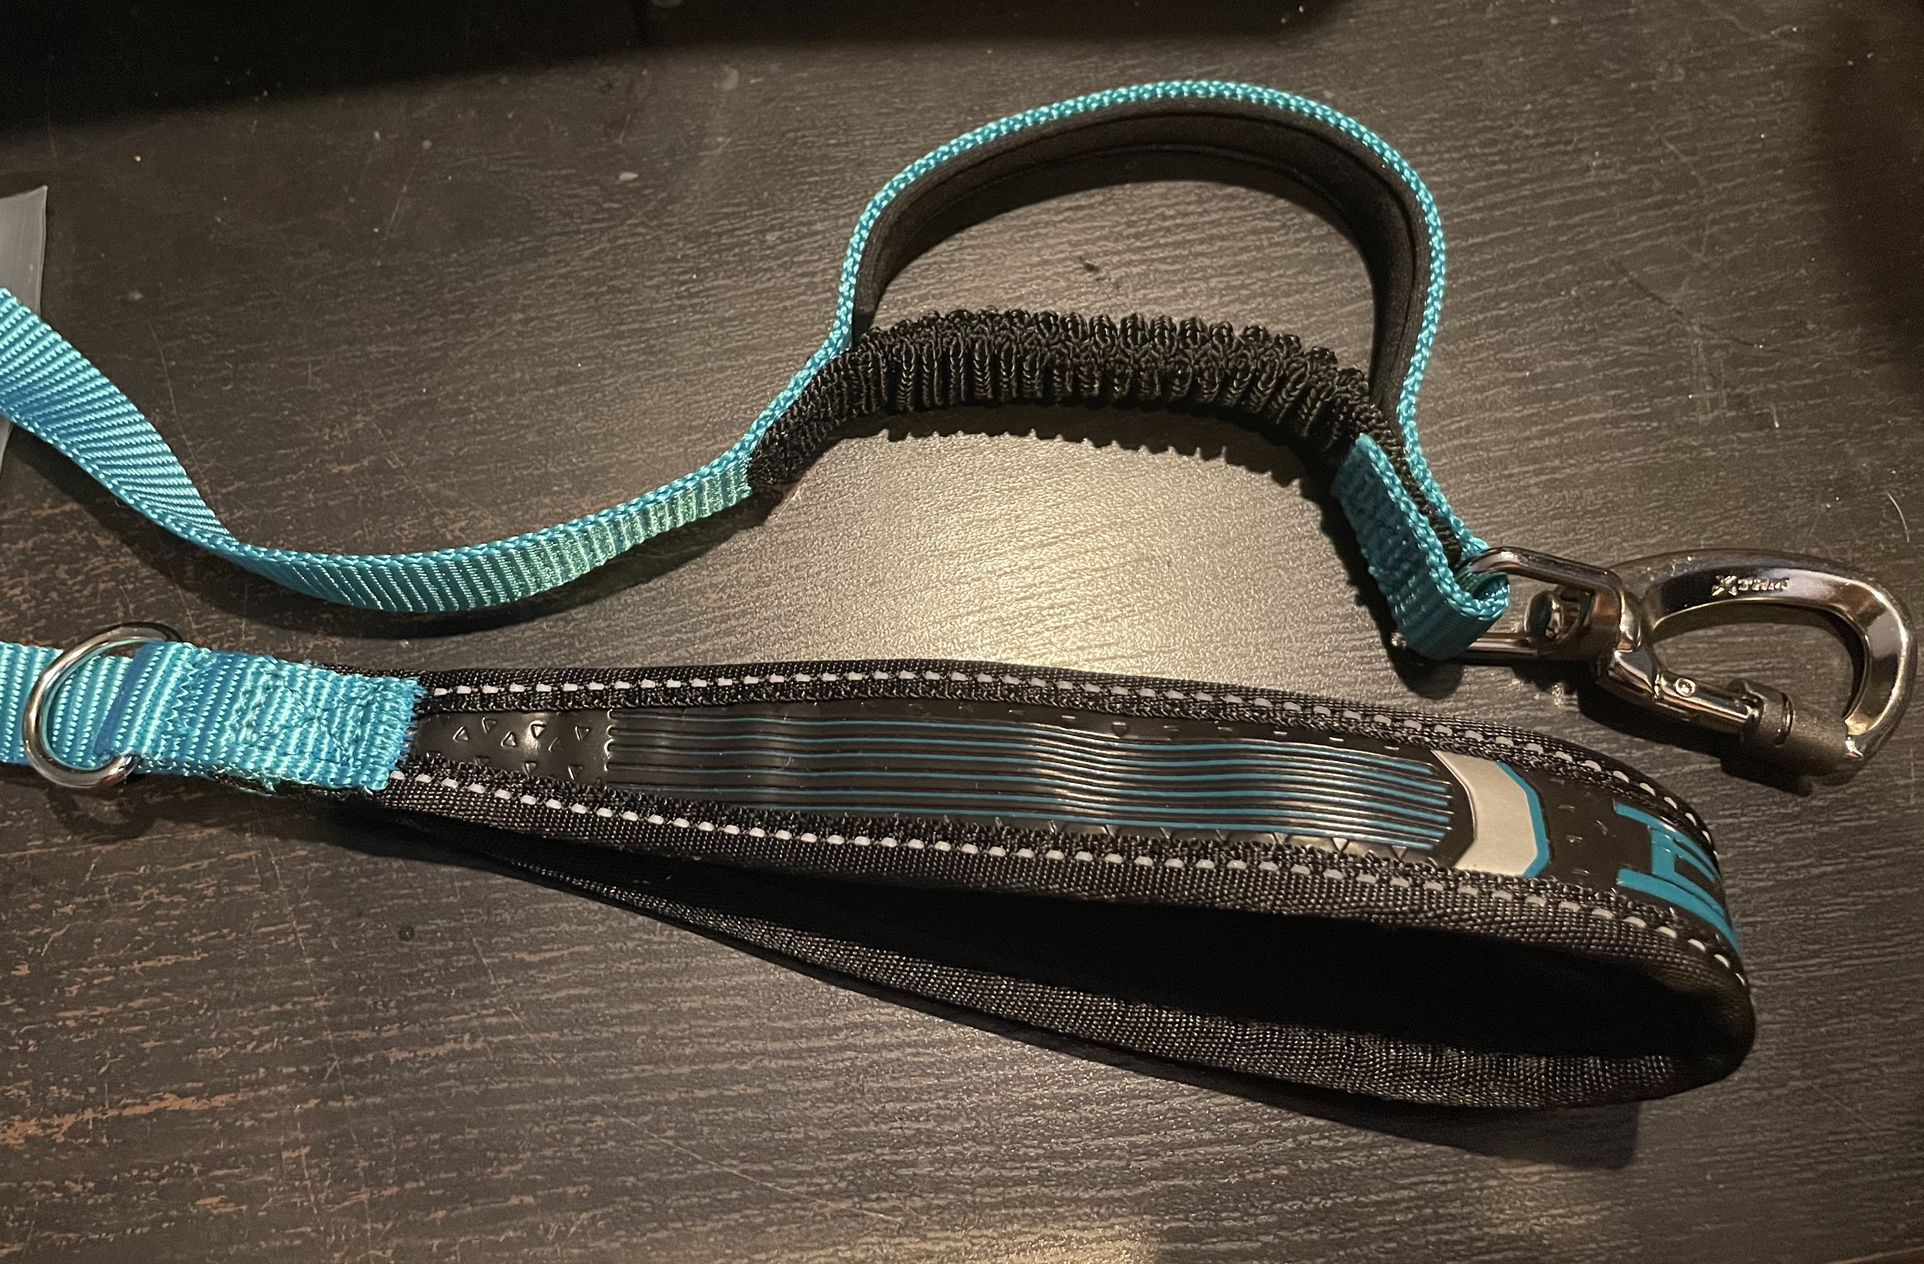 XTRM Dog Leash Collar Set